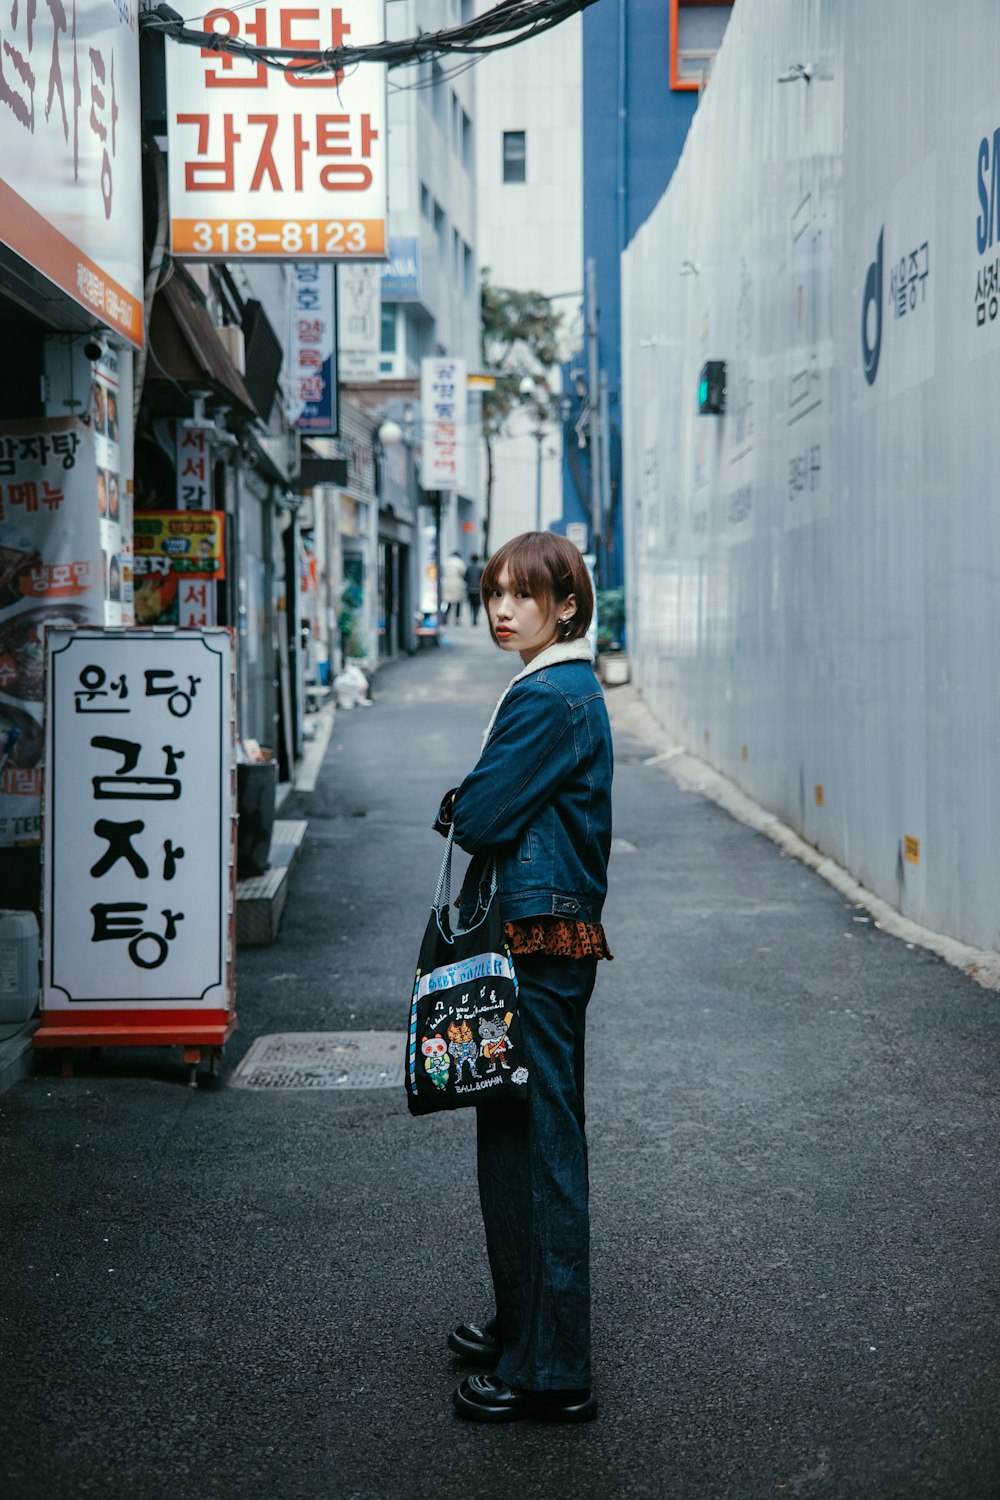 a boy standing on a street holding a bag